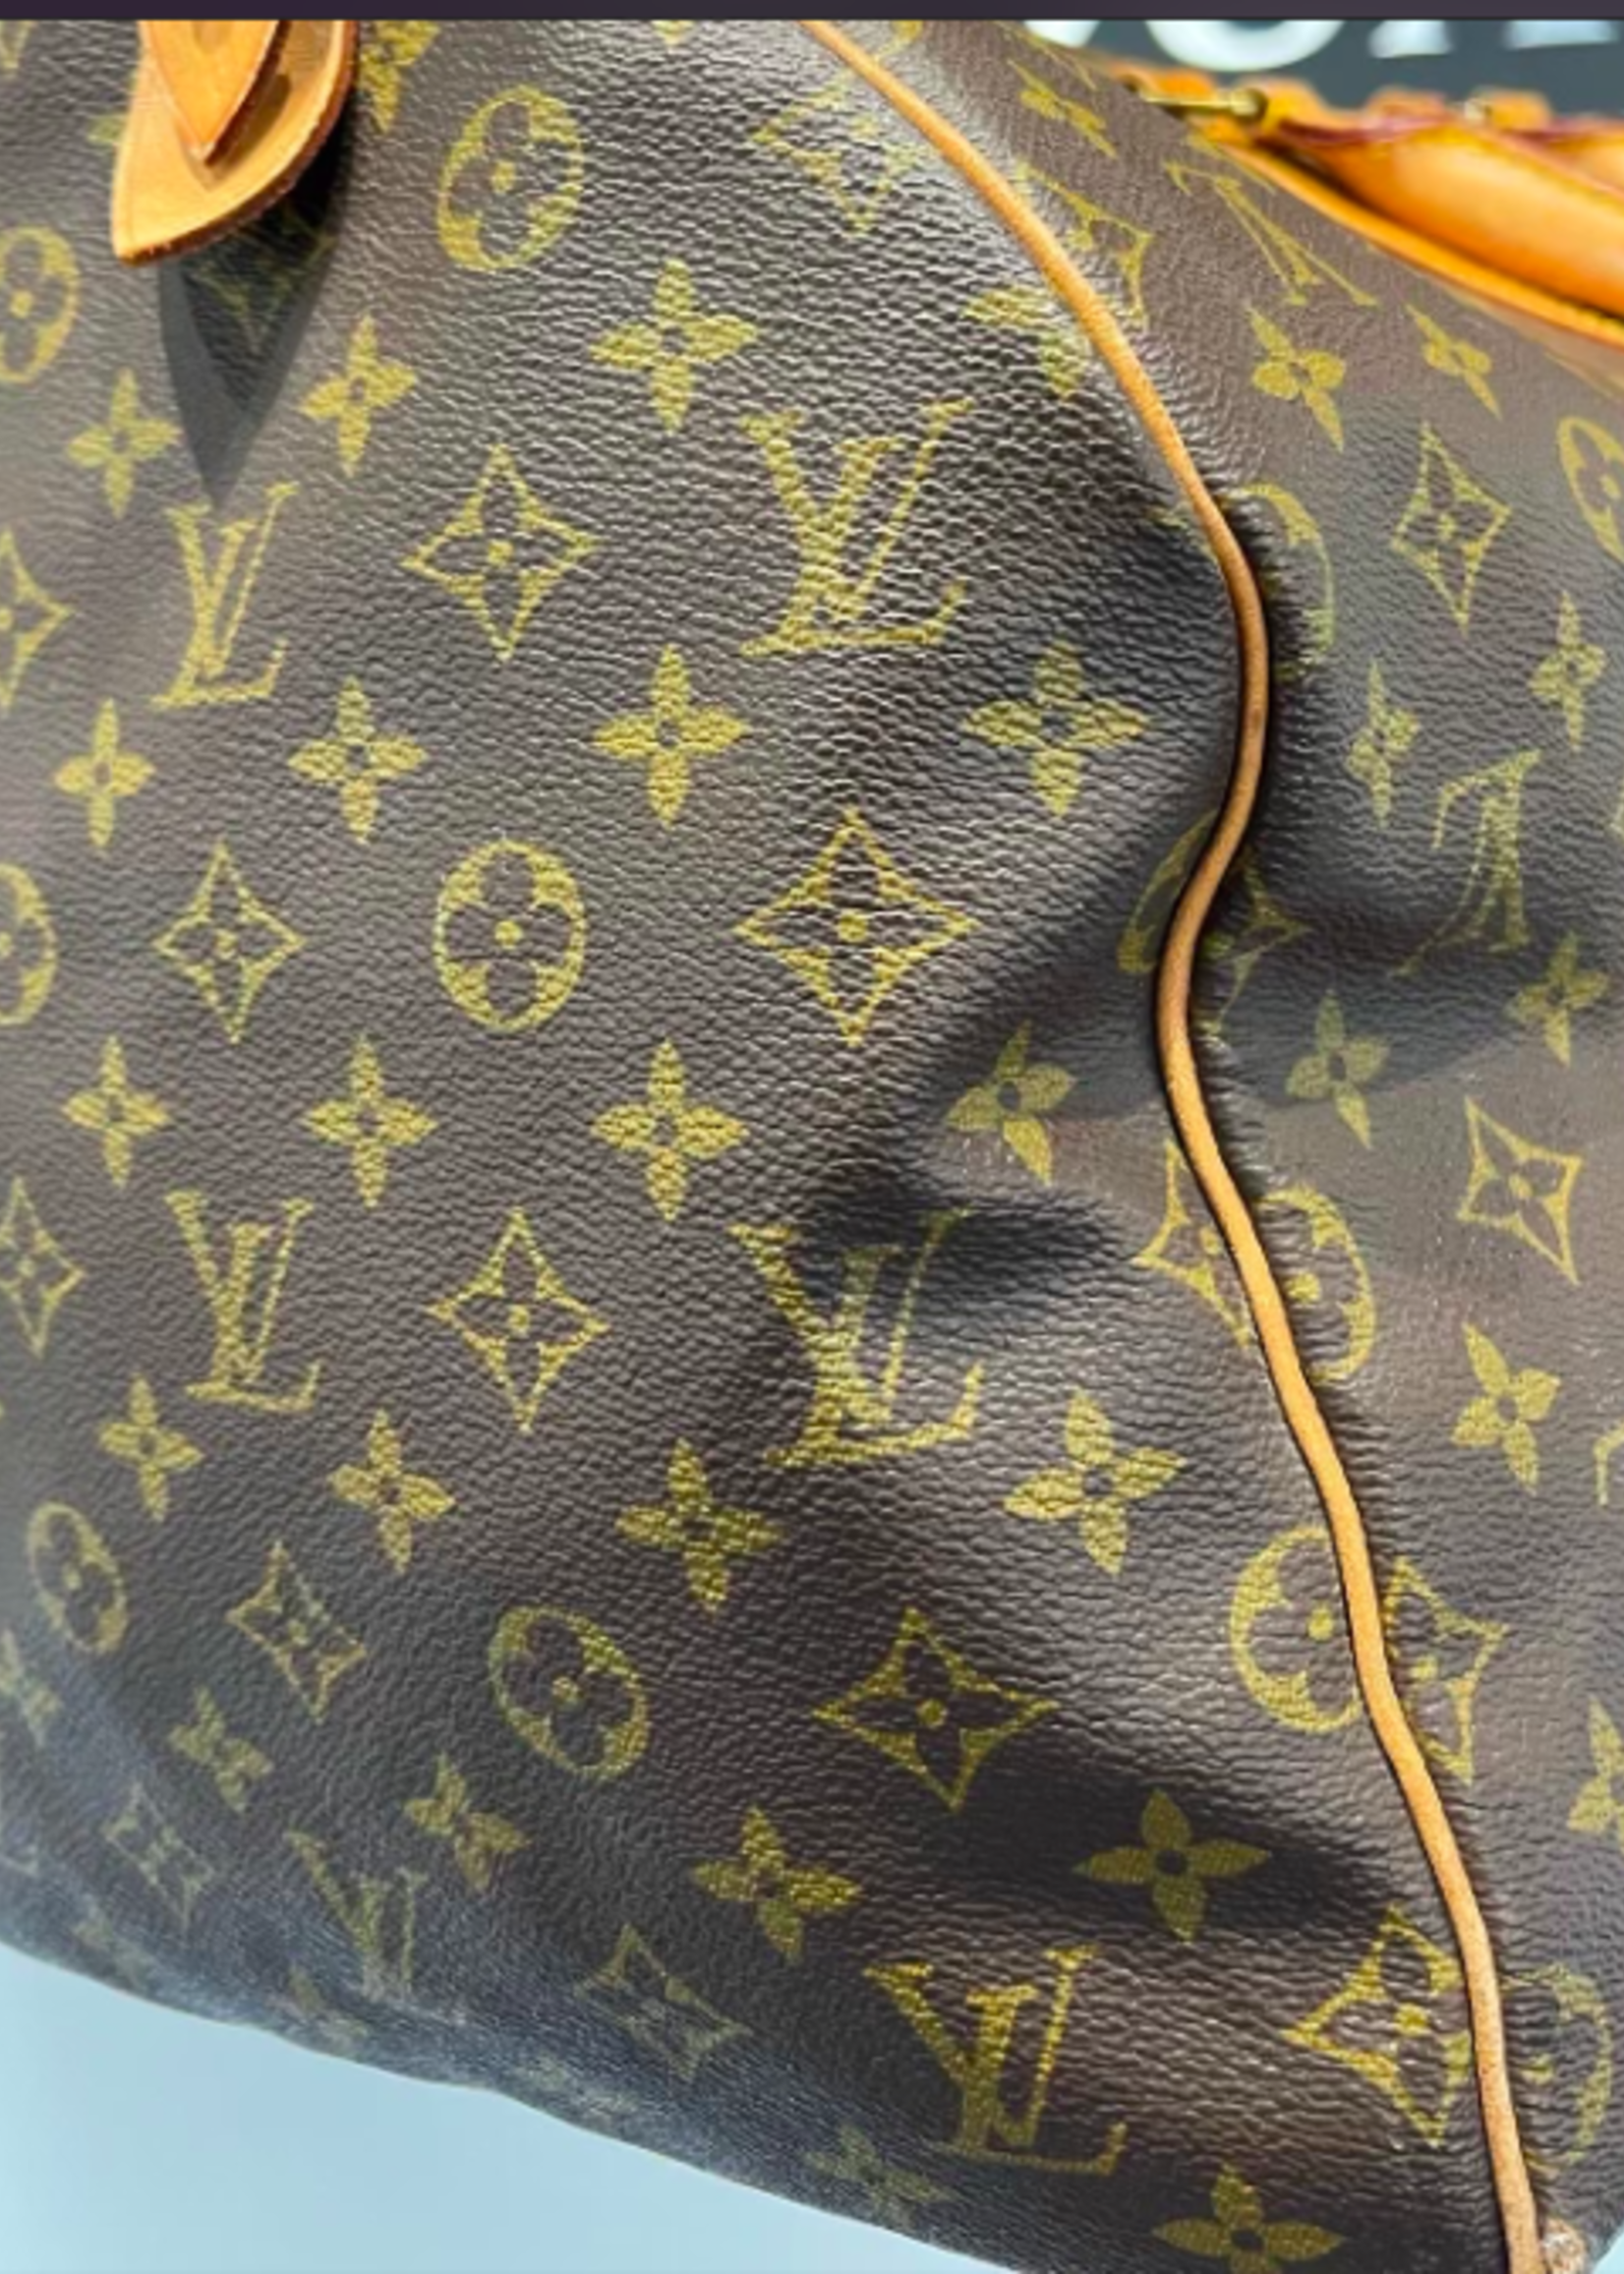 Louis Vuitton Keepall 55 Bandouliere - Bijoux Bag Spa & Consignment